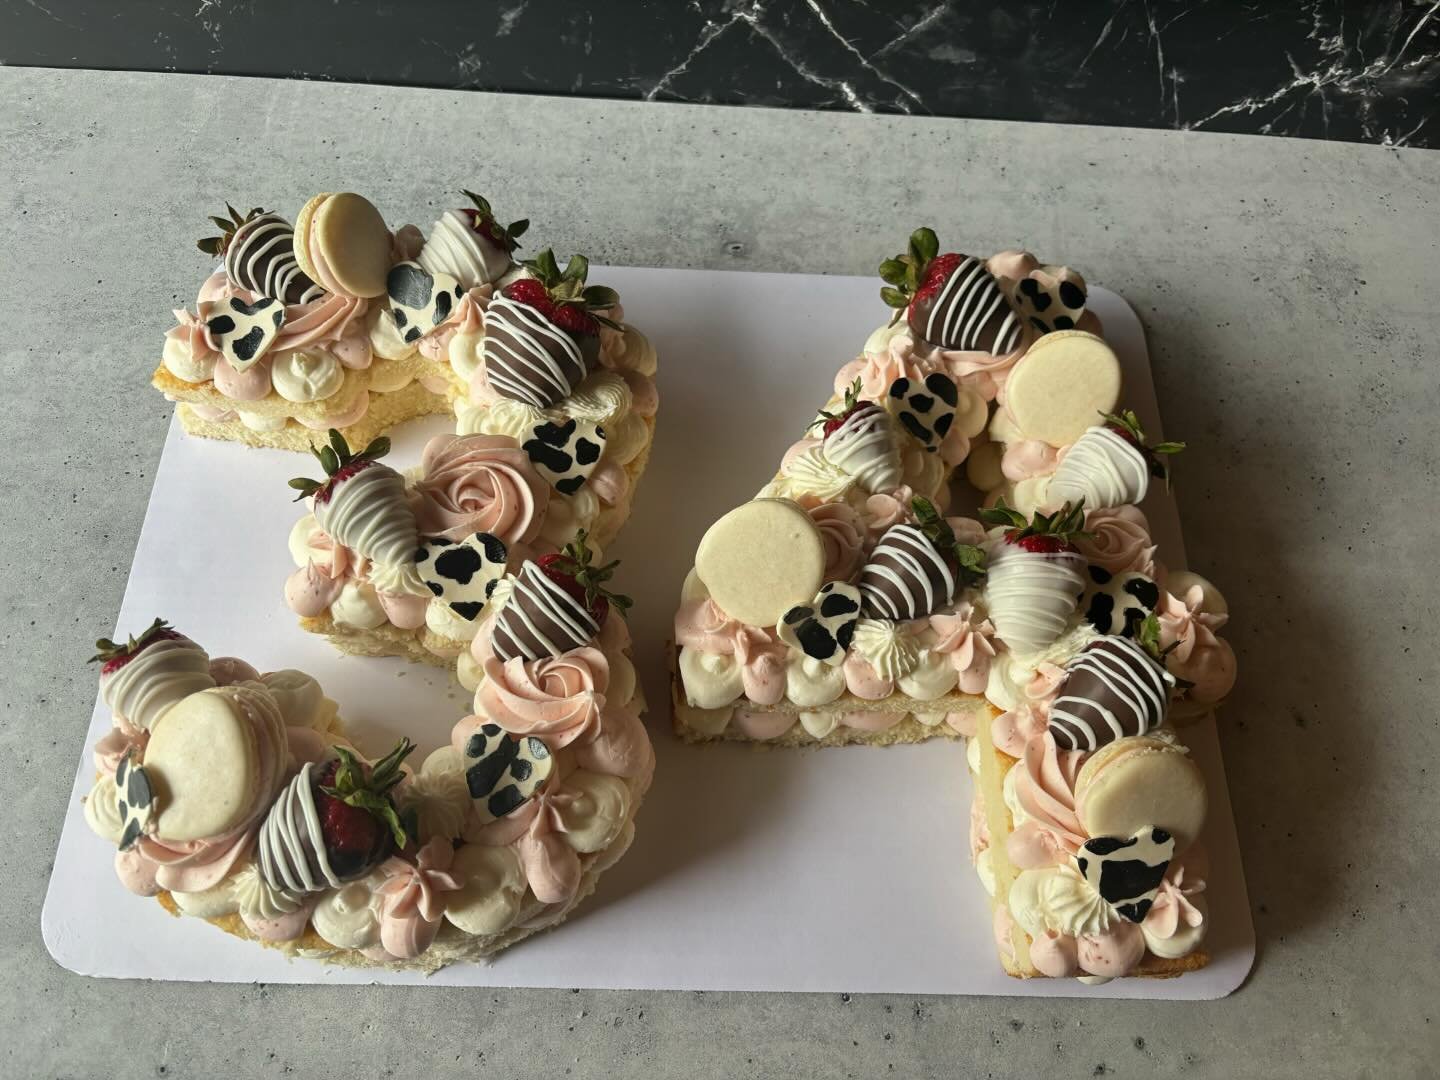 Happy 34th birthday!! 
.
.
.
.
.
#Vanilla cake #strawberrybuttercream #vanillabuttercream #modelingchocolatehearts #chocolatecoveredstrawberries #macarons #rosettes #birthdaycake #34thbirthday #birthdayparty #artfulcakerybyjulie